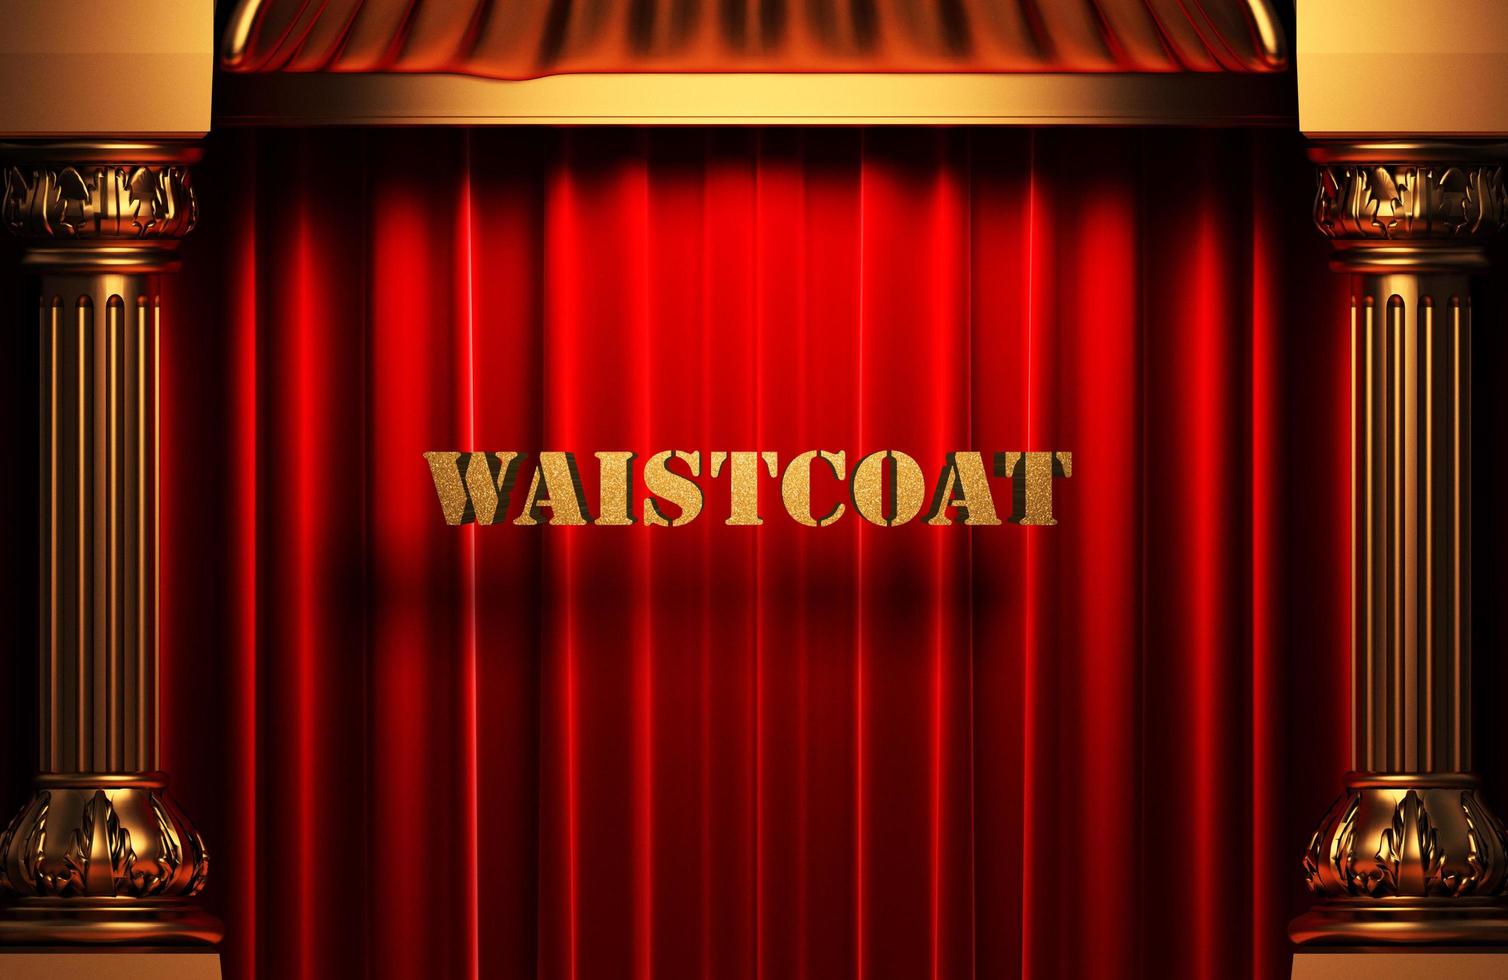 waistcoat golden word on red curtain photo